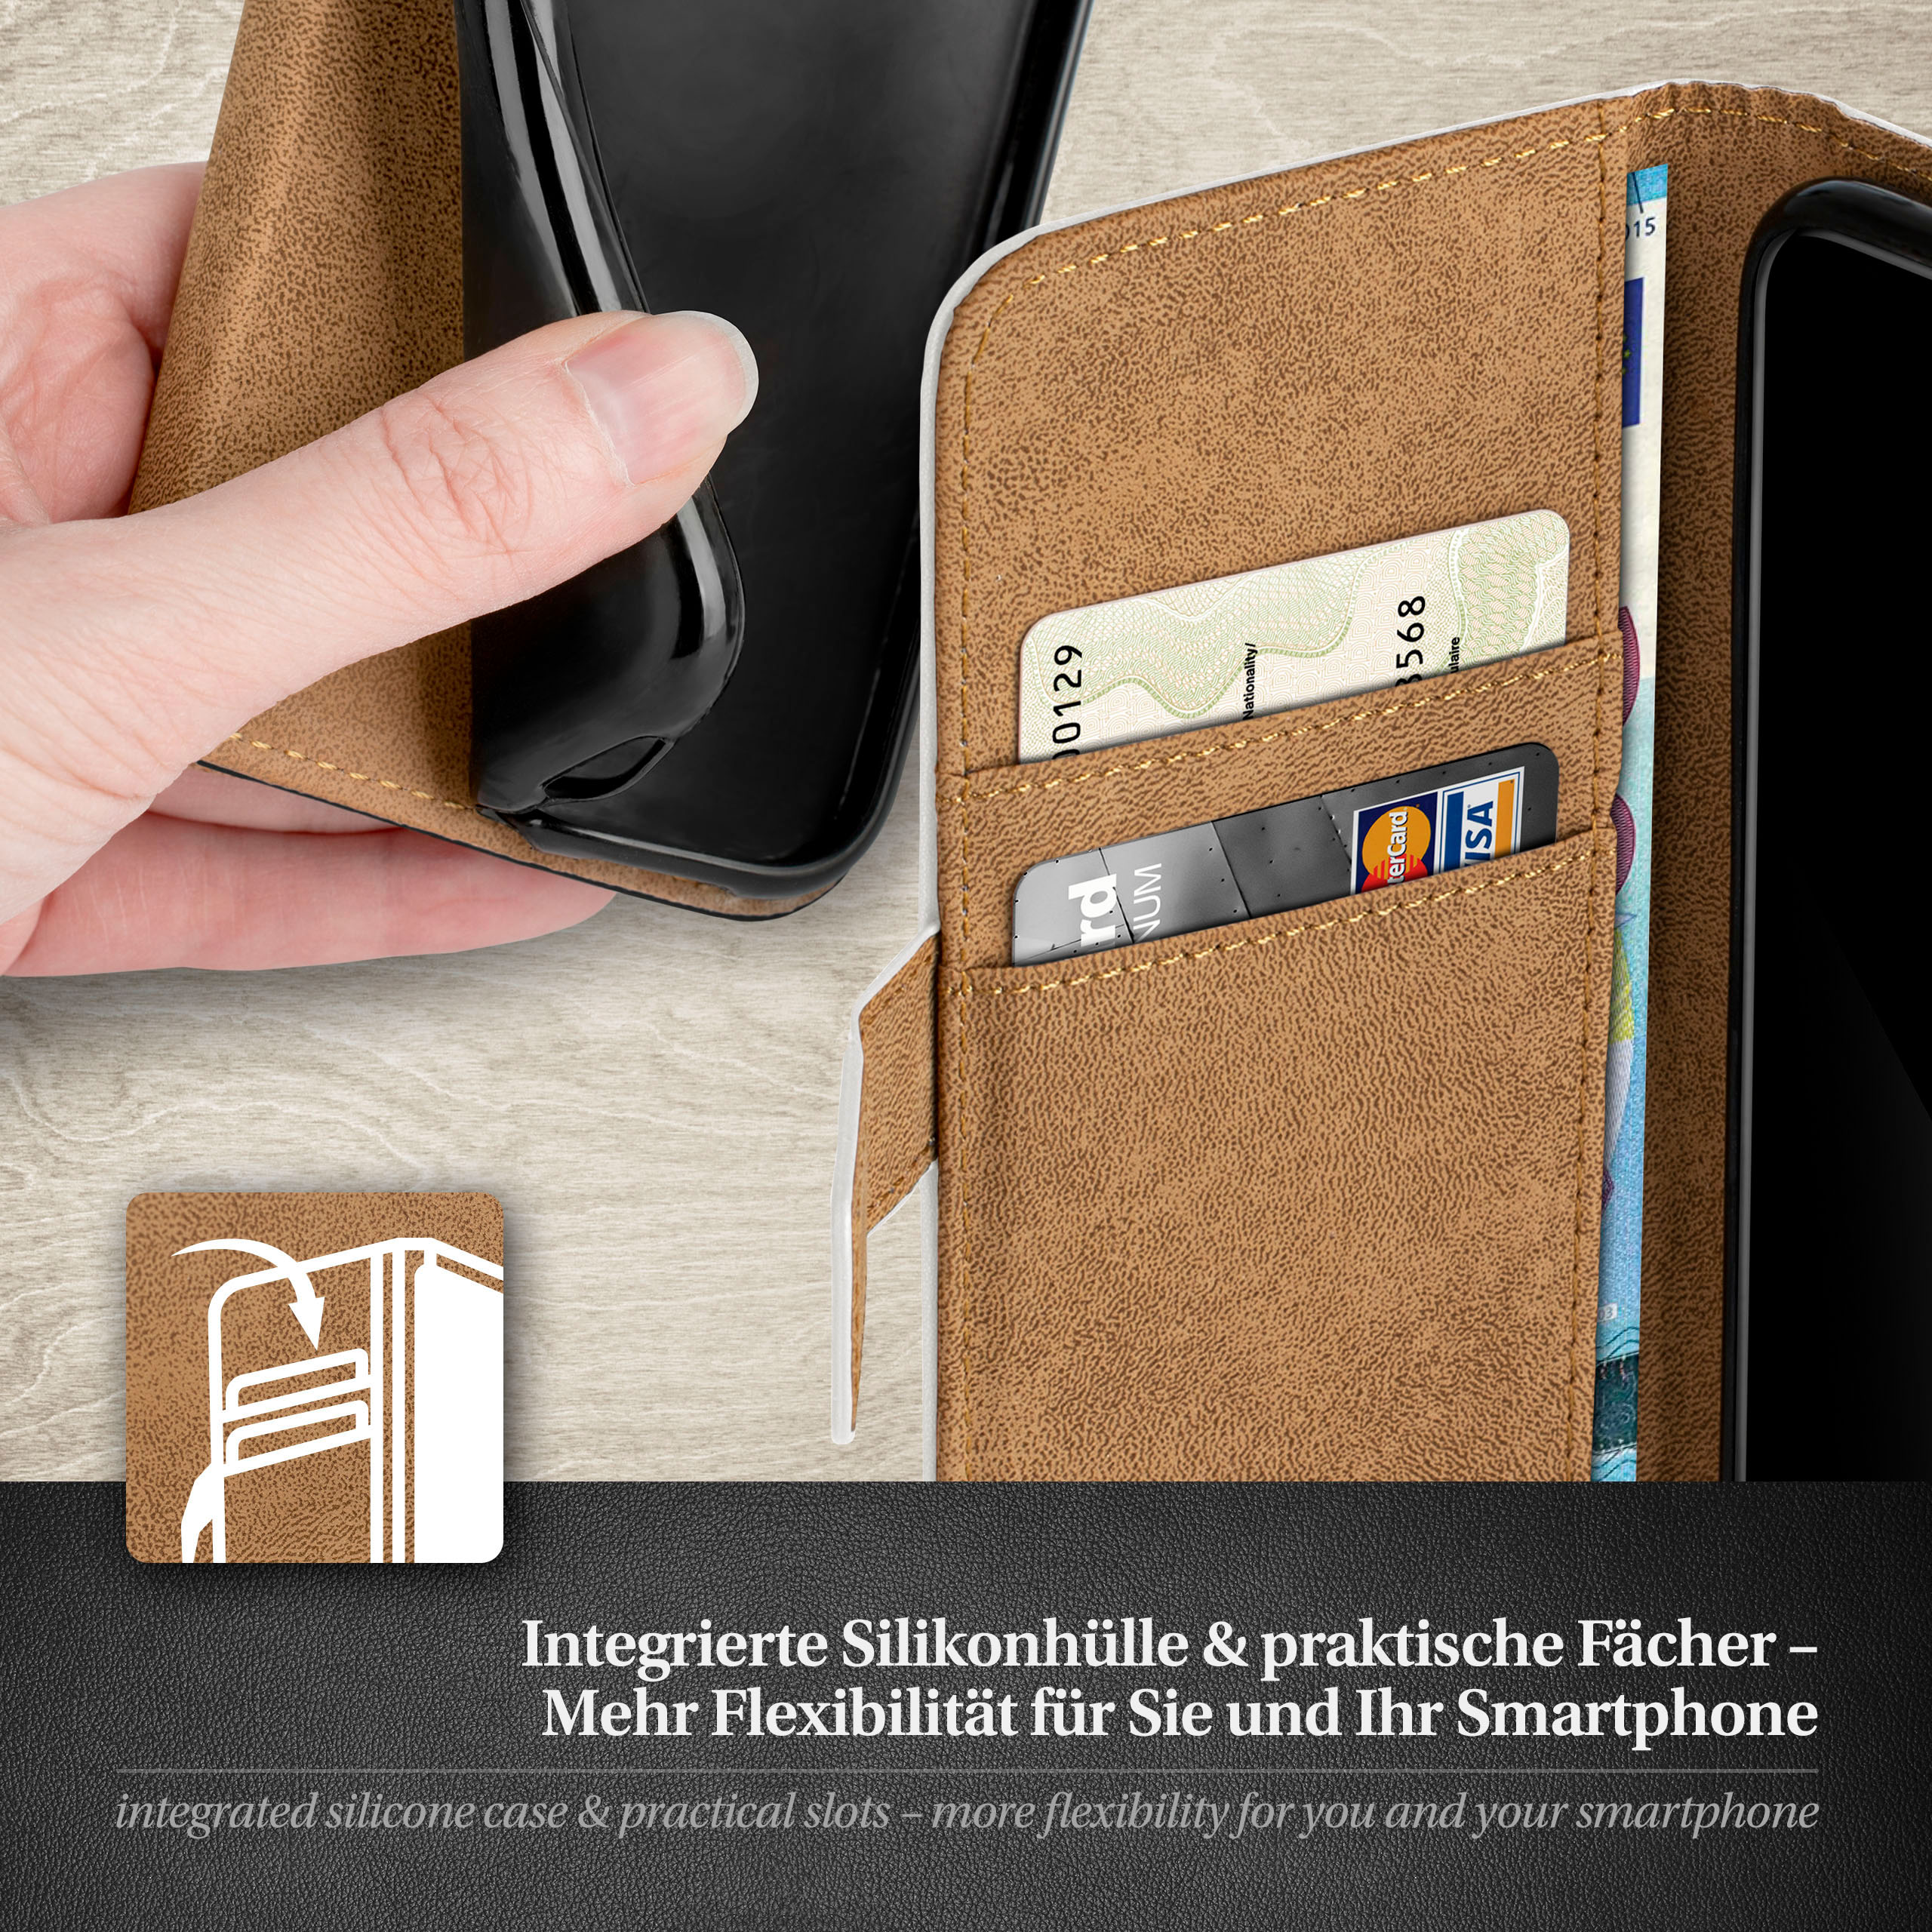 Pearl-White MOEX S7, Bookcover, Galaxy Case, Book Samsung,